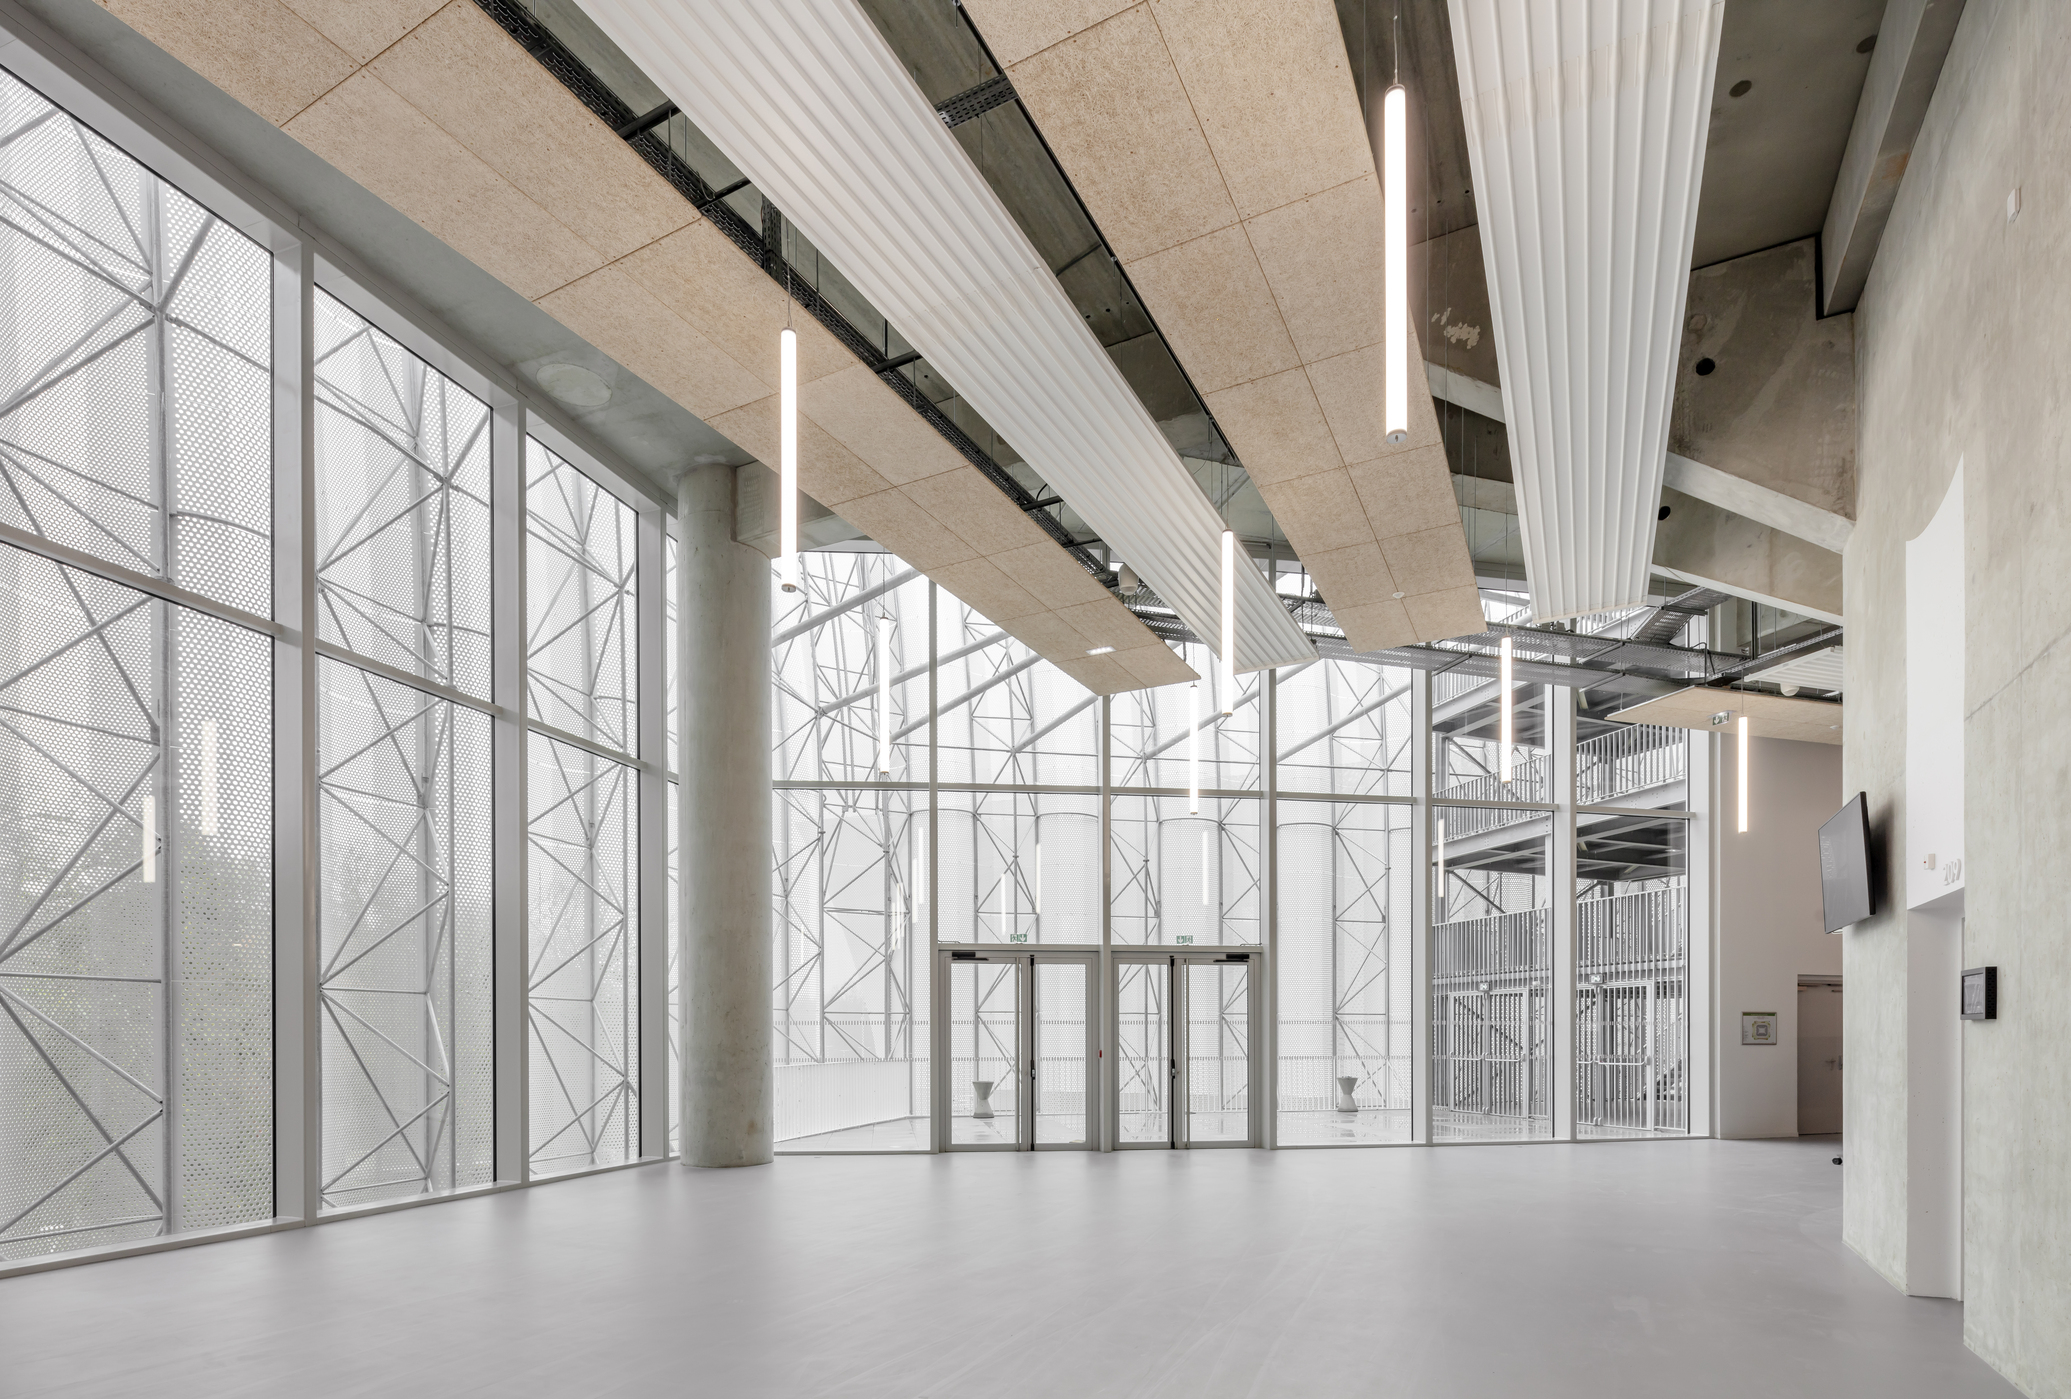 CO'Met 各场馆内特别以低调的灰色系，描绘质朴的空间氛围。